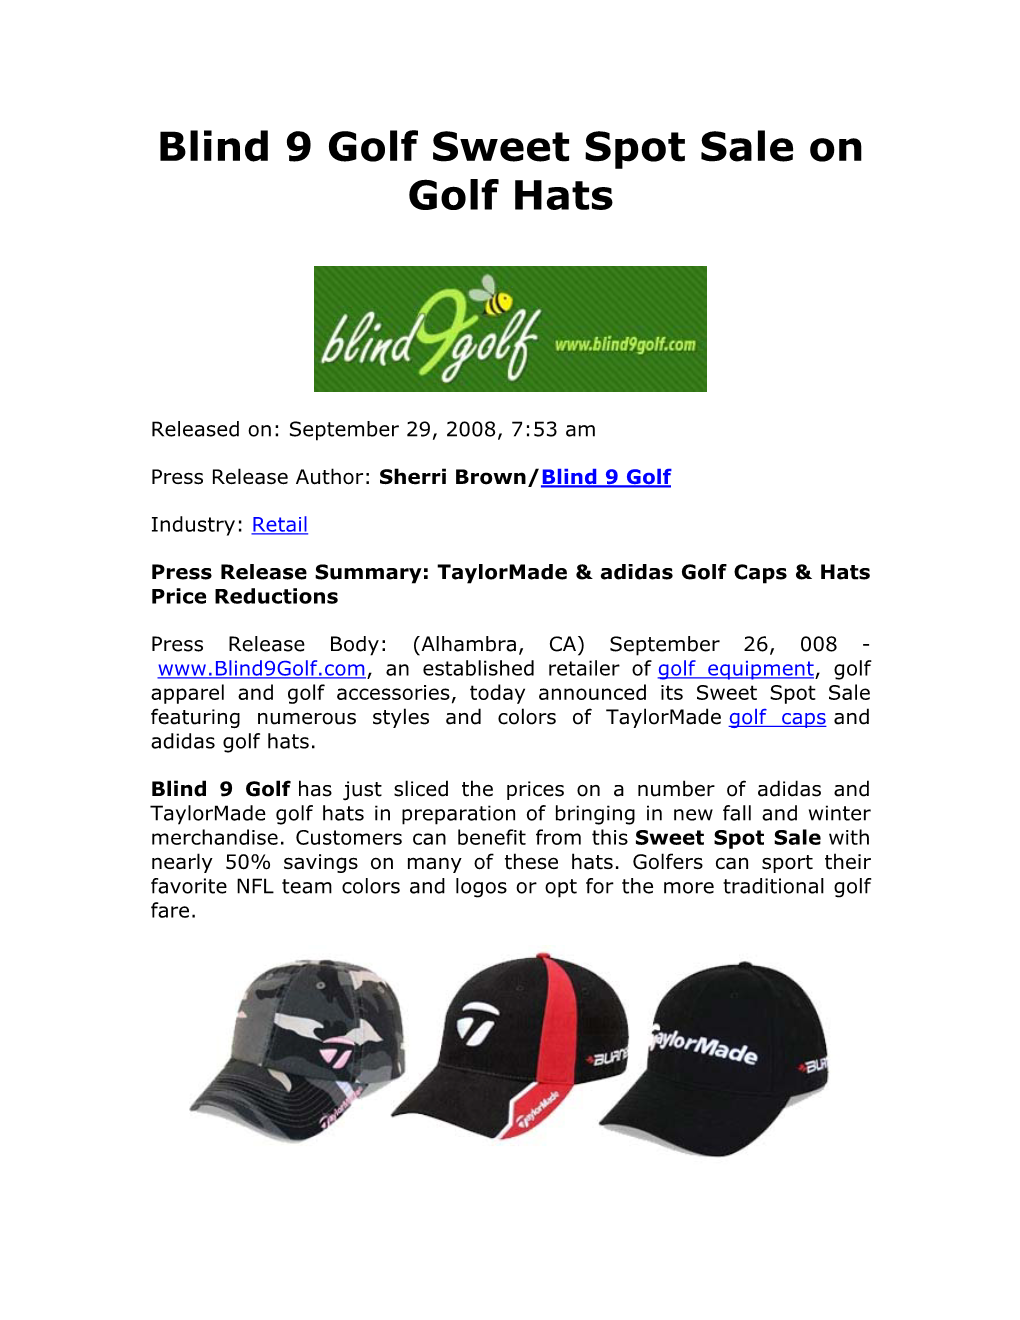 Blind 9 Golf Sweet Spot Sale on Golf Hats